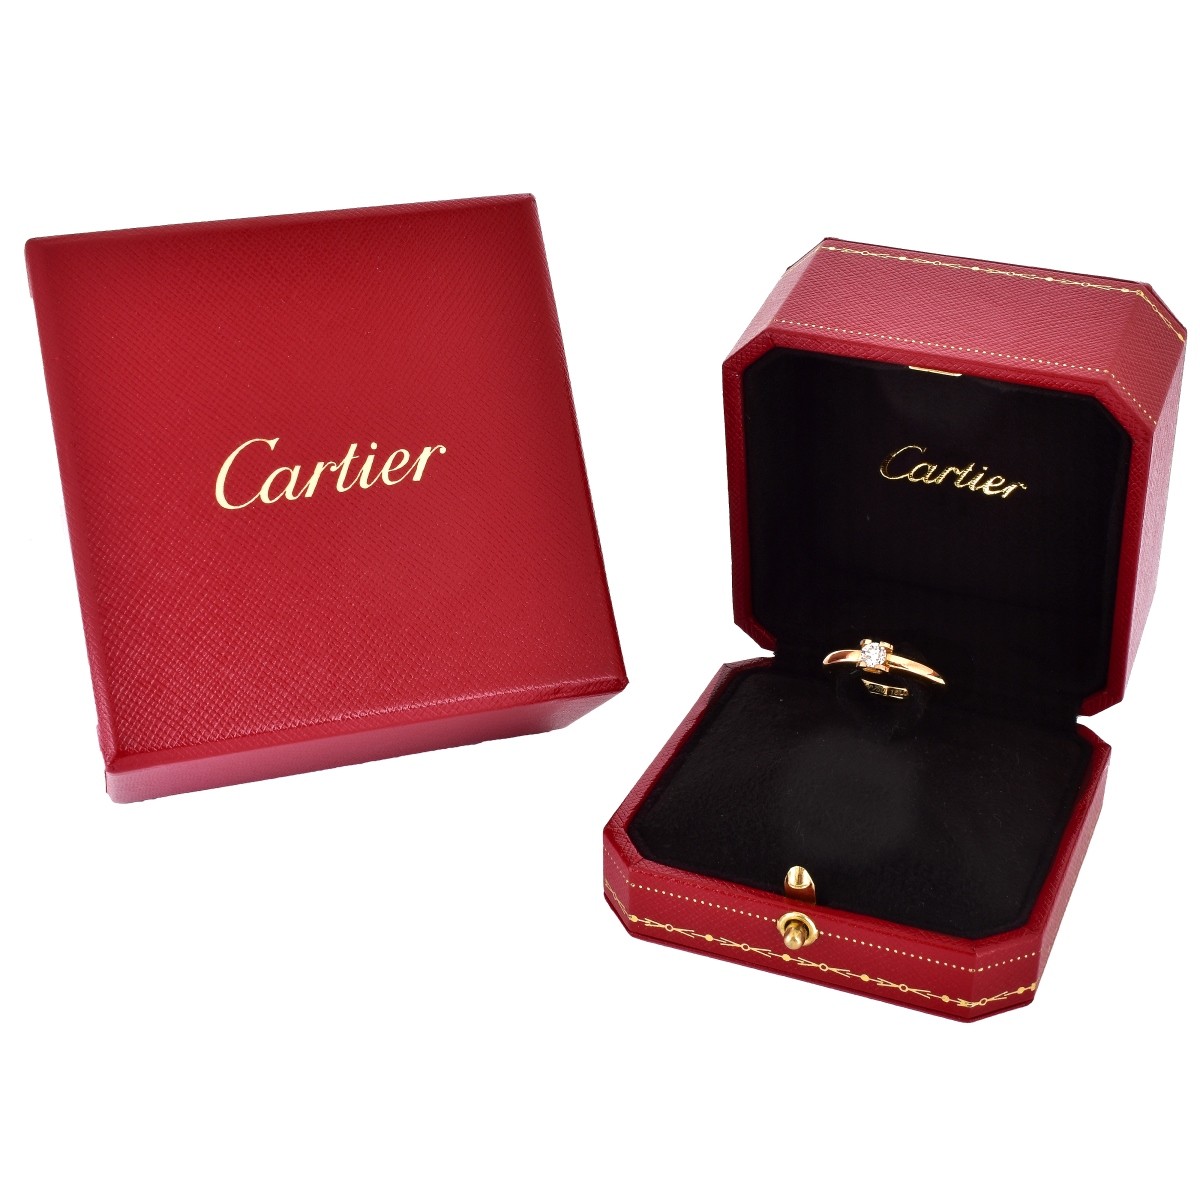 Cartier Louis Solitaire Ring